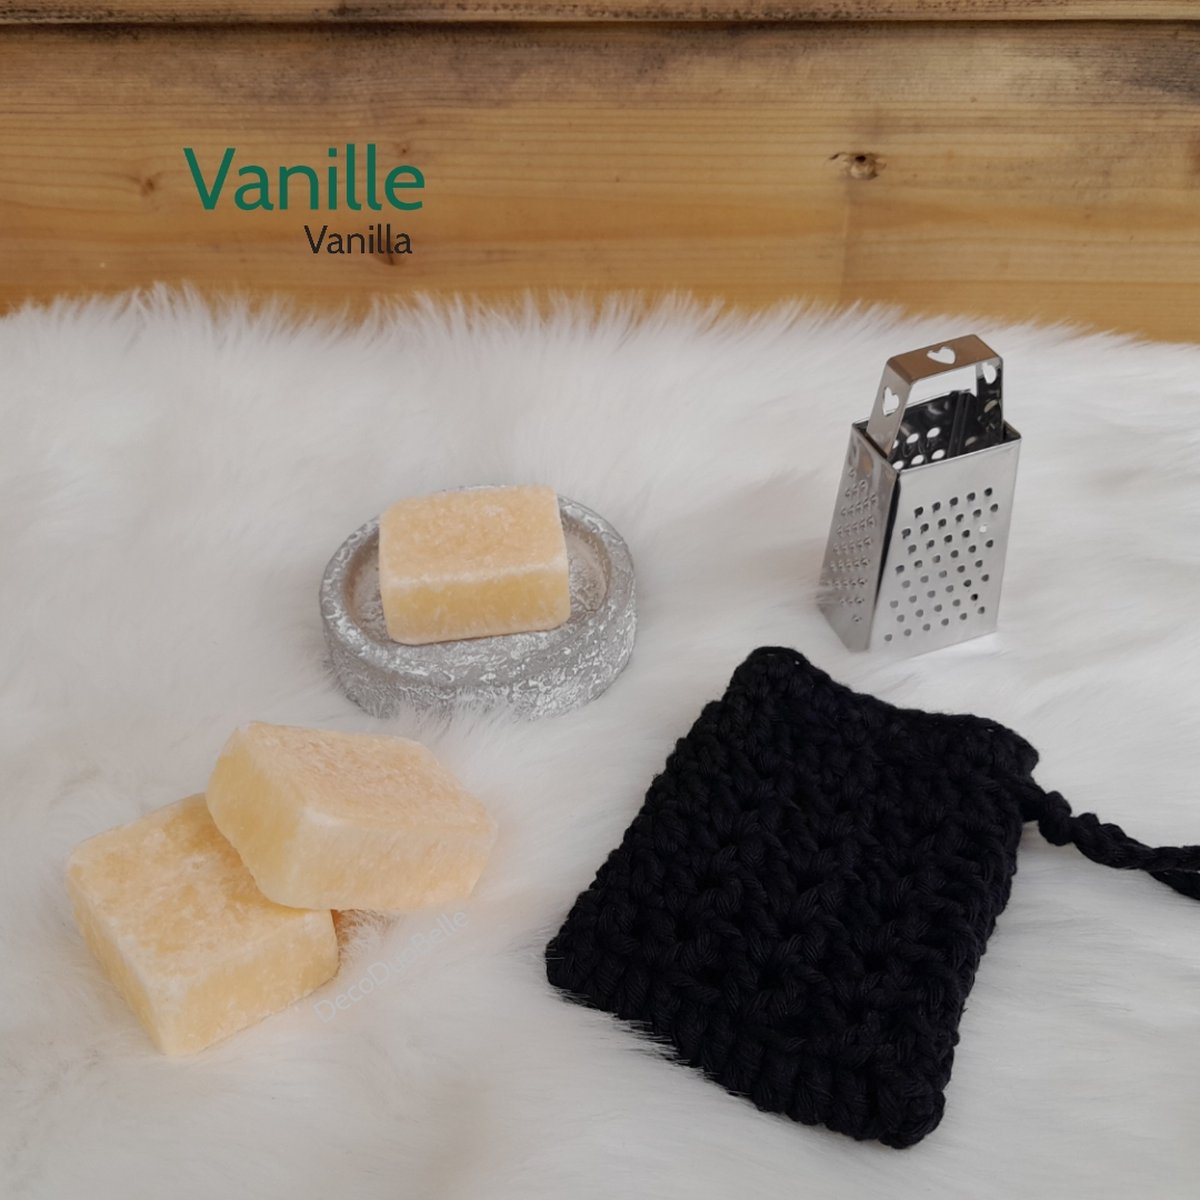 3 Amberblokjes Vanille - Geurblokjes Set met Schaaltje, Rasp en Gehaakt Geurzakje - Giftset